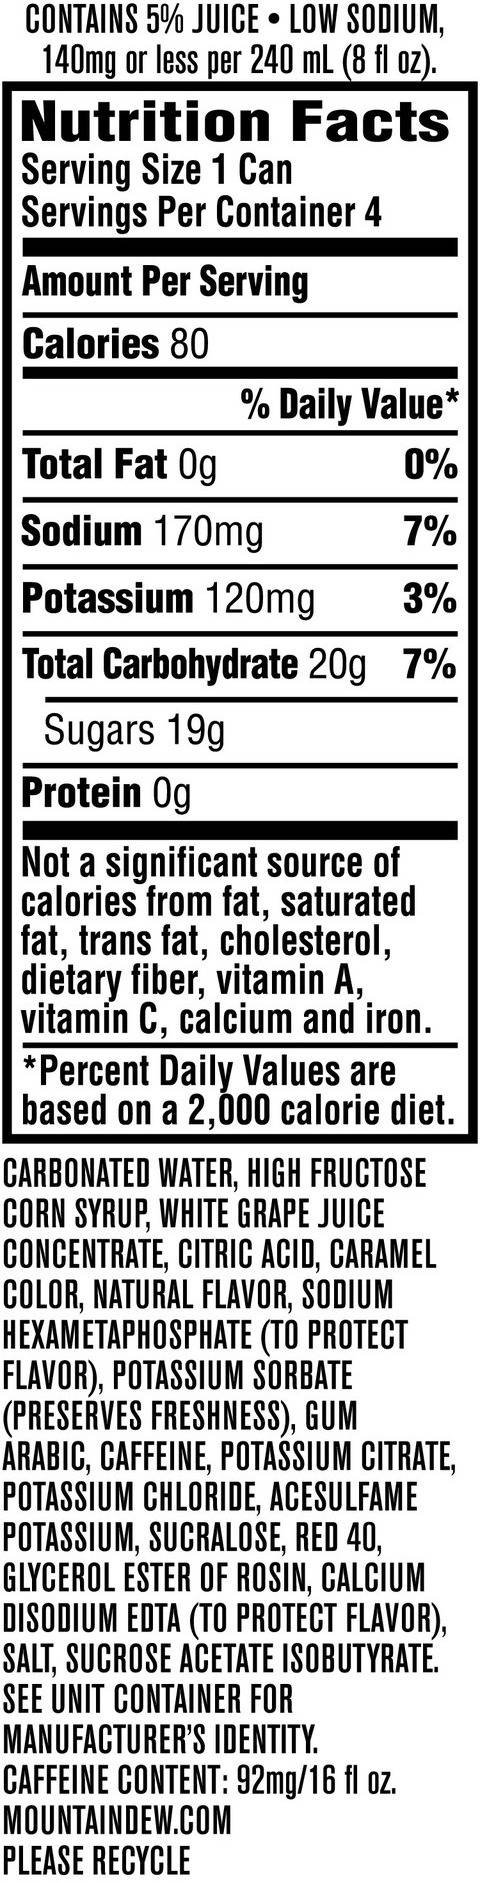 Image describing nutrition information for product Mtn Dew Kickstart Black Cherry